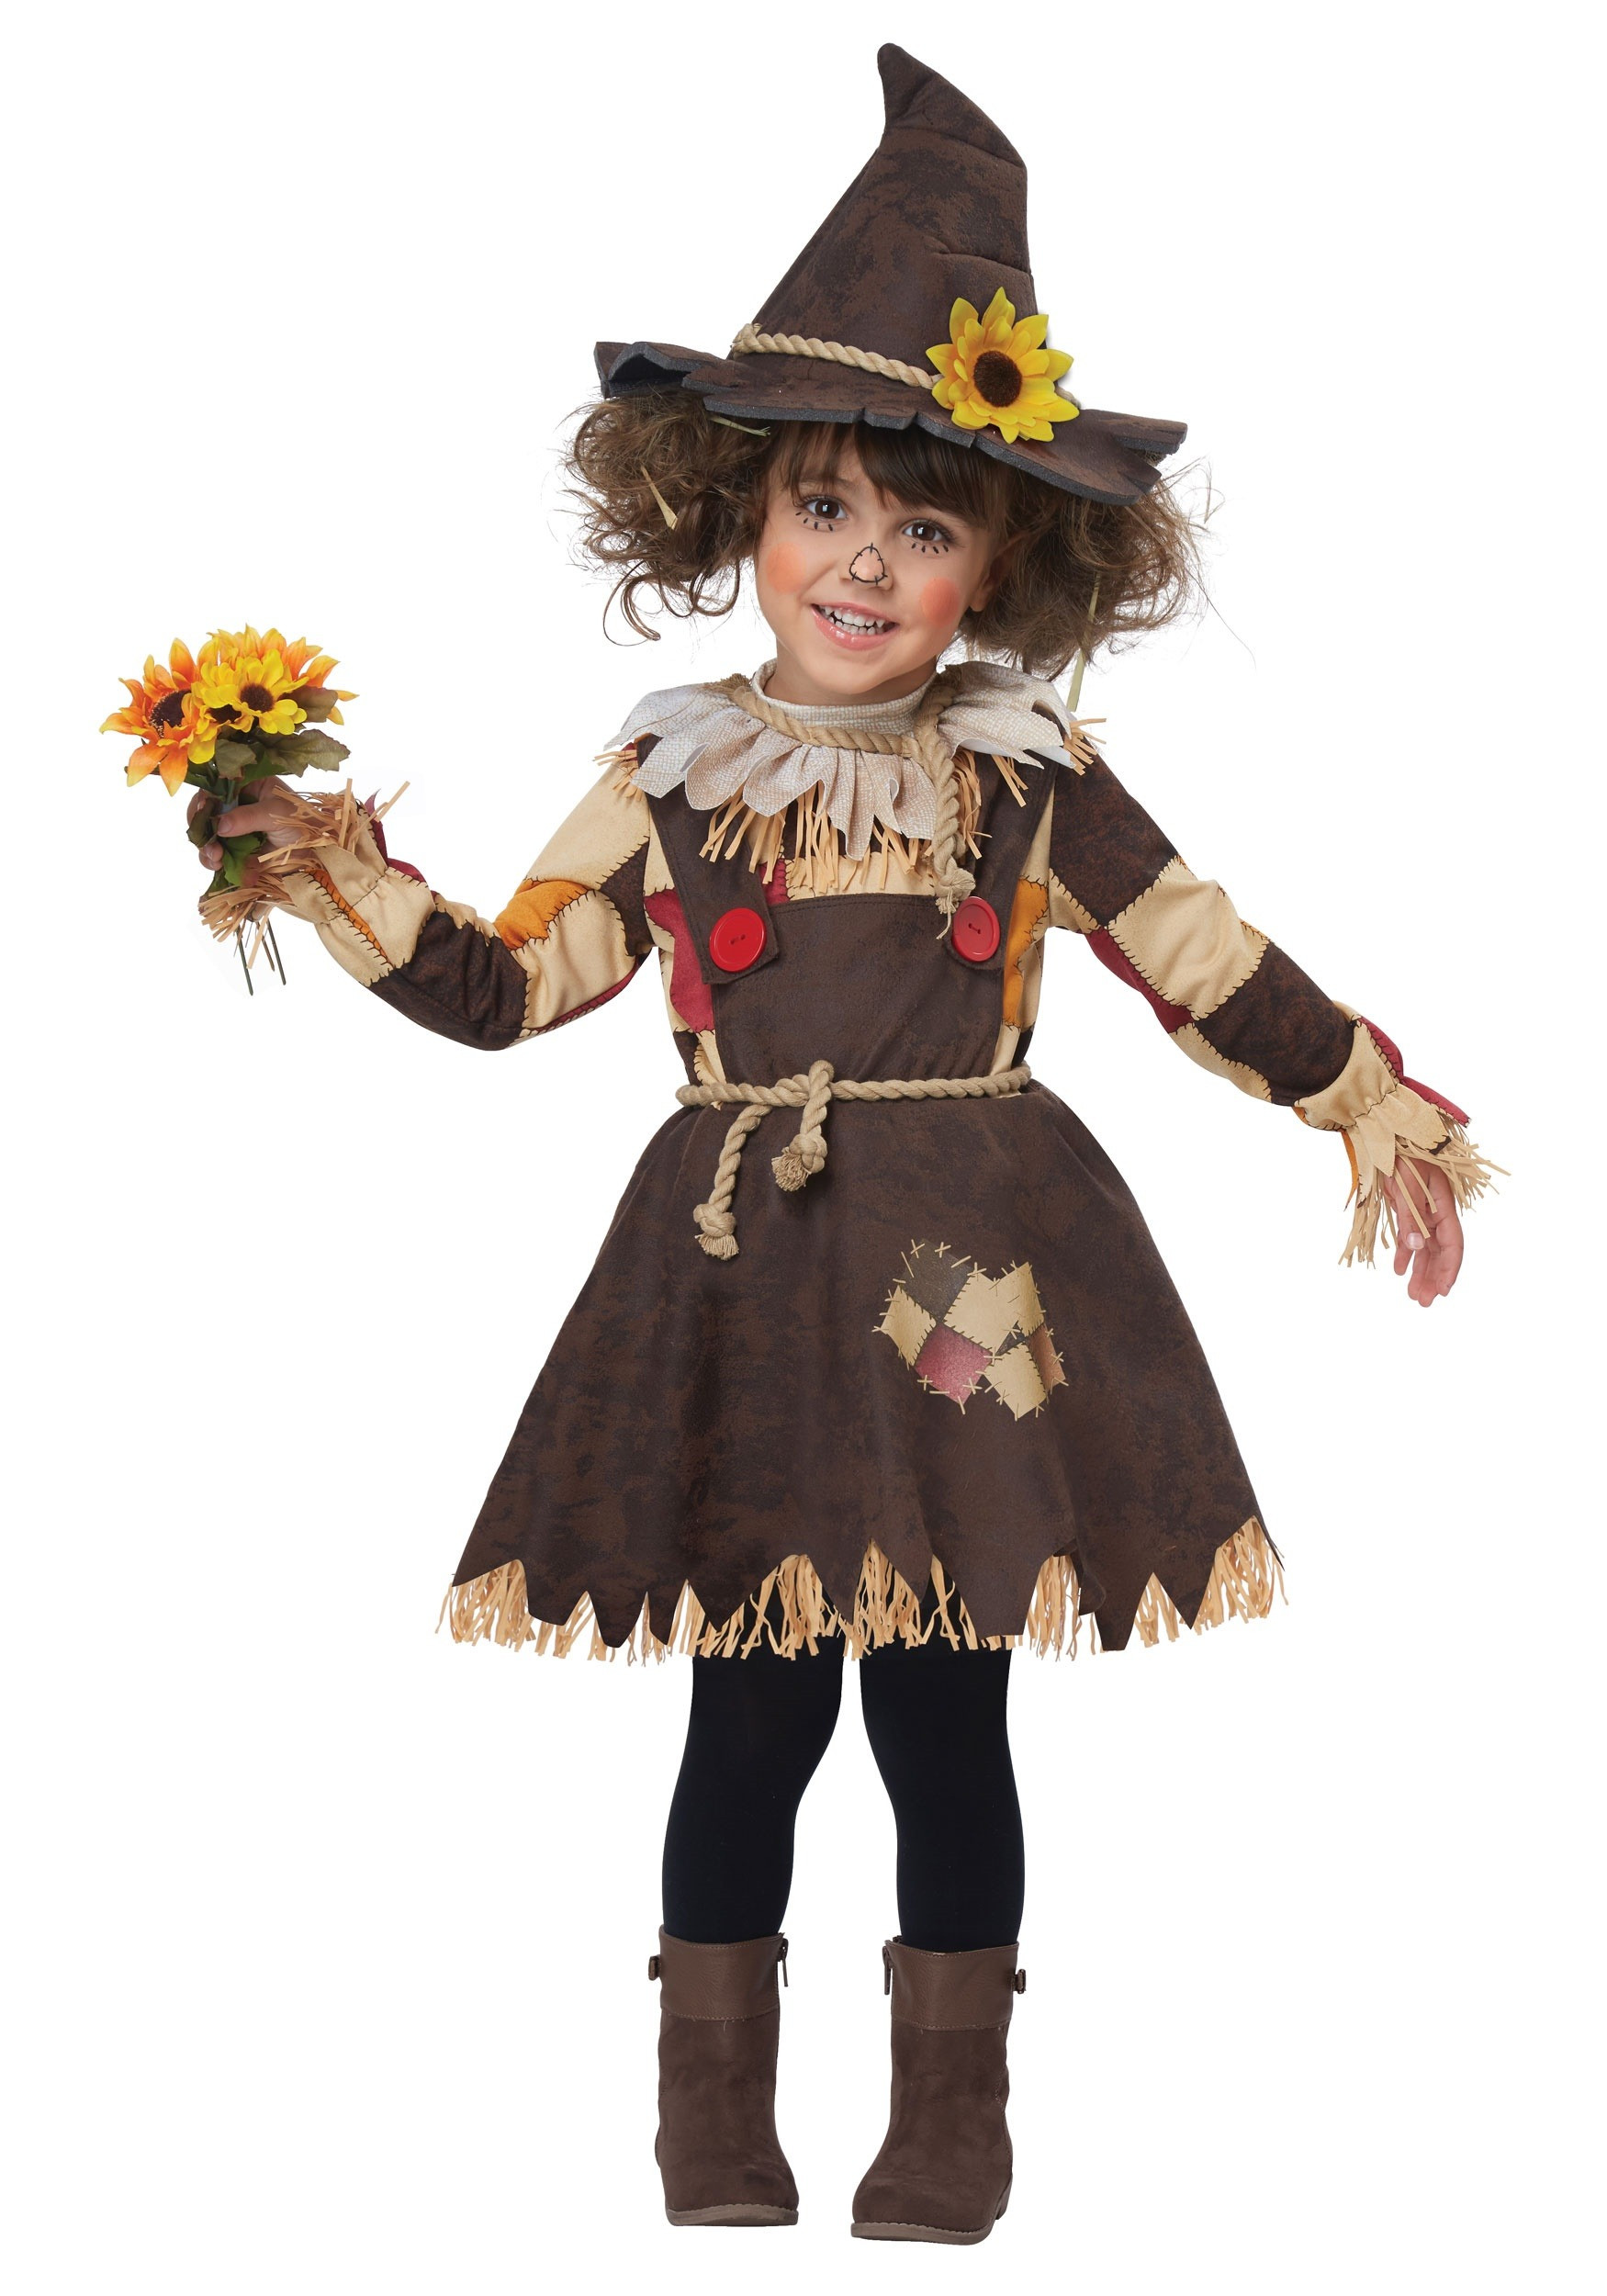 Toddler Scarecrow Costume DIY
 Toddler Pumpkin Patch Scarecrow Costume